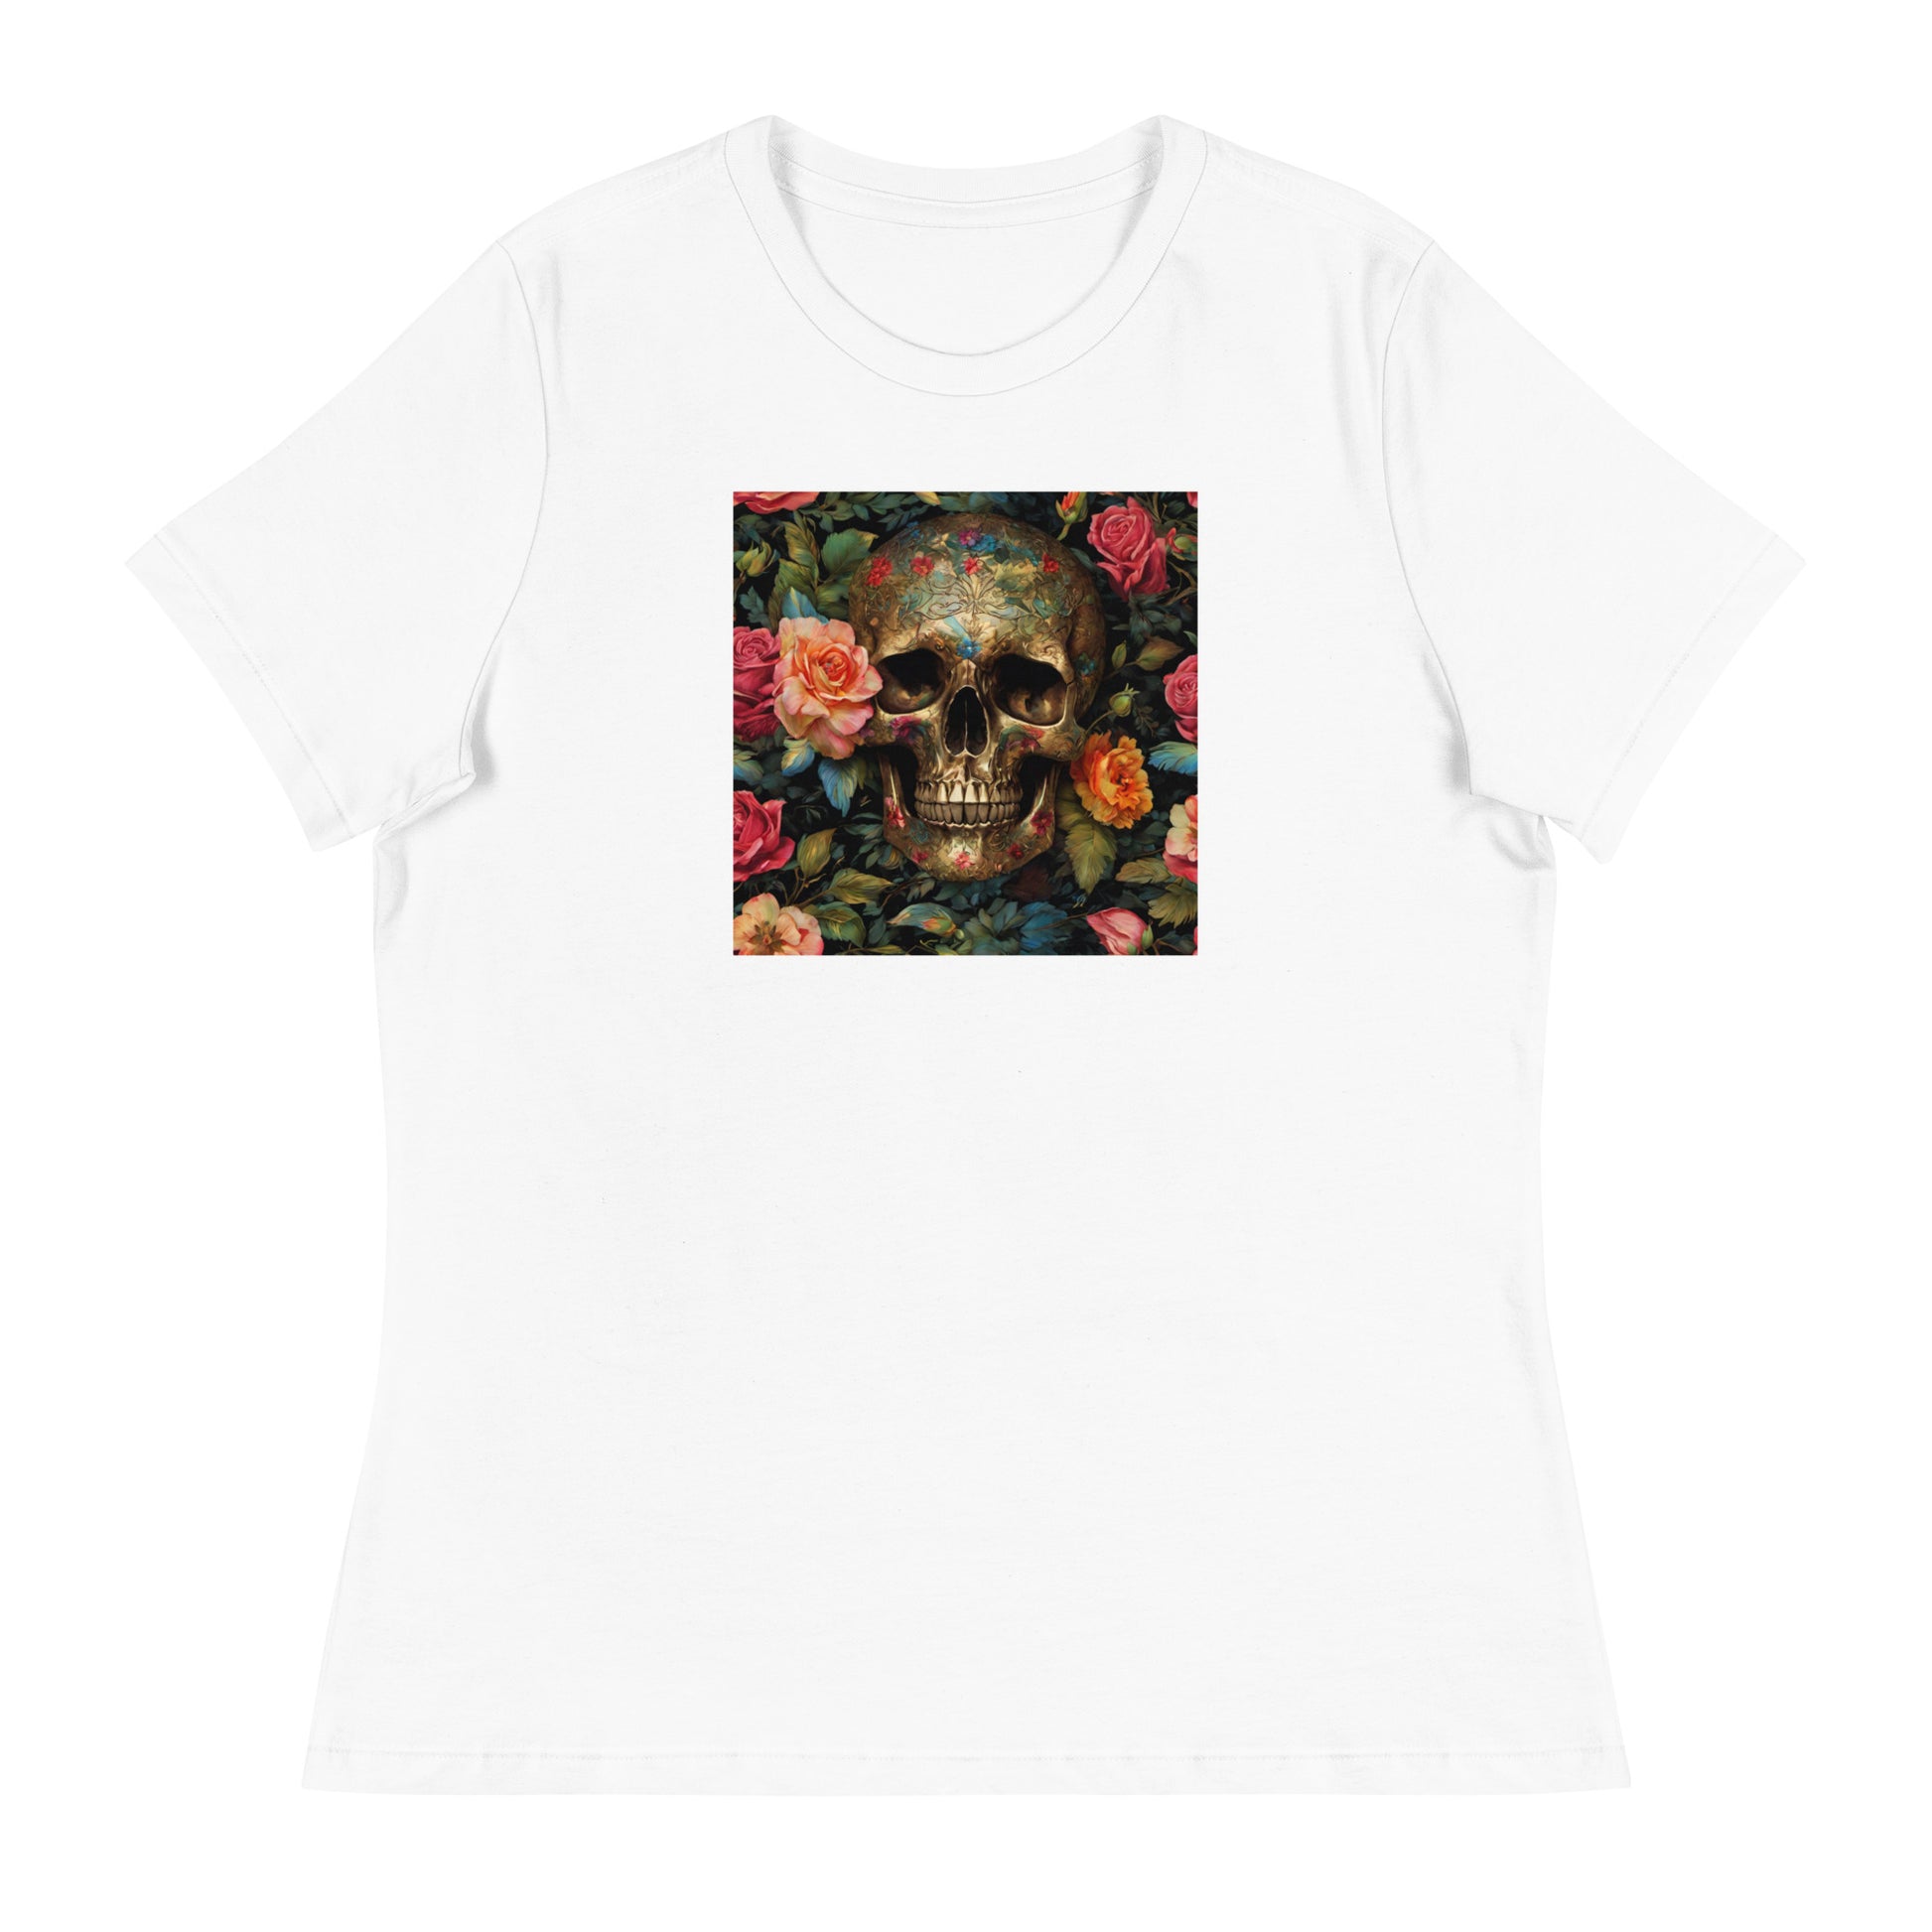 Skull and Roses Graphic Women's T-Shirt White